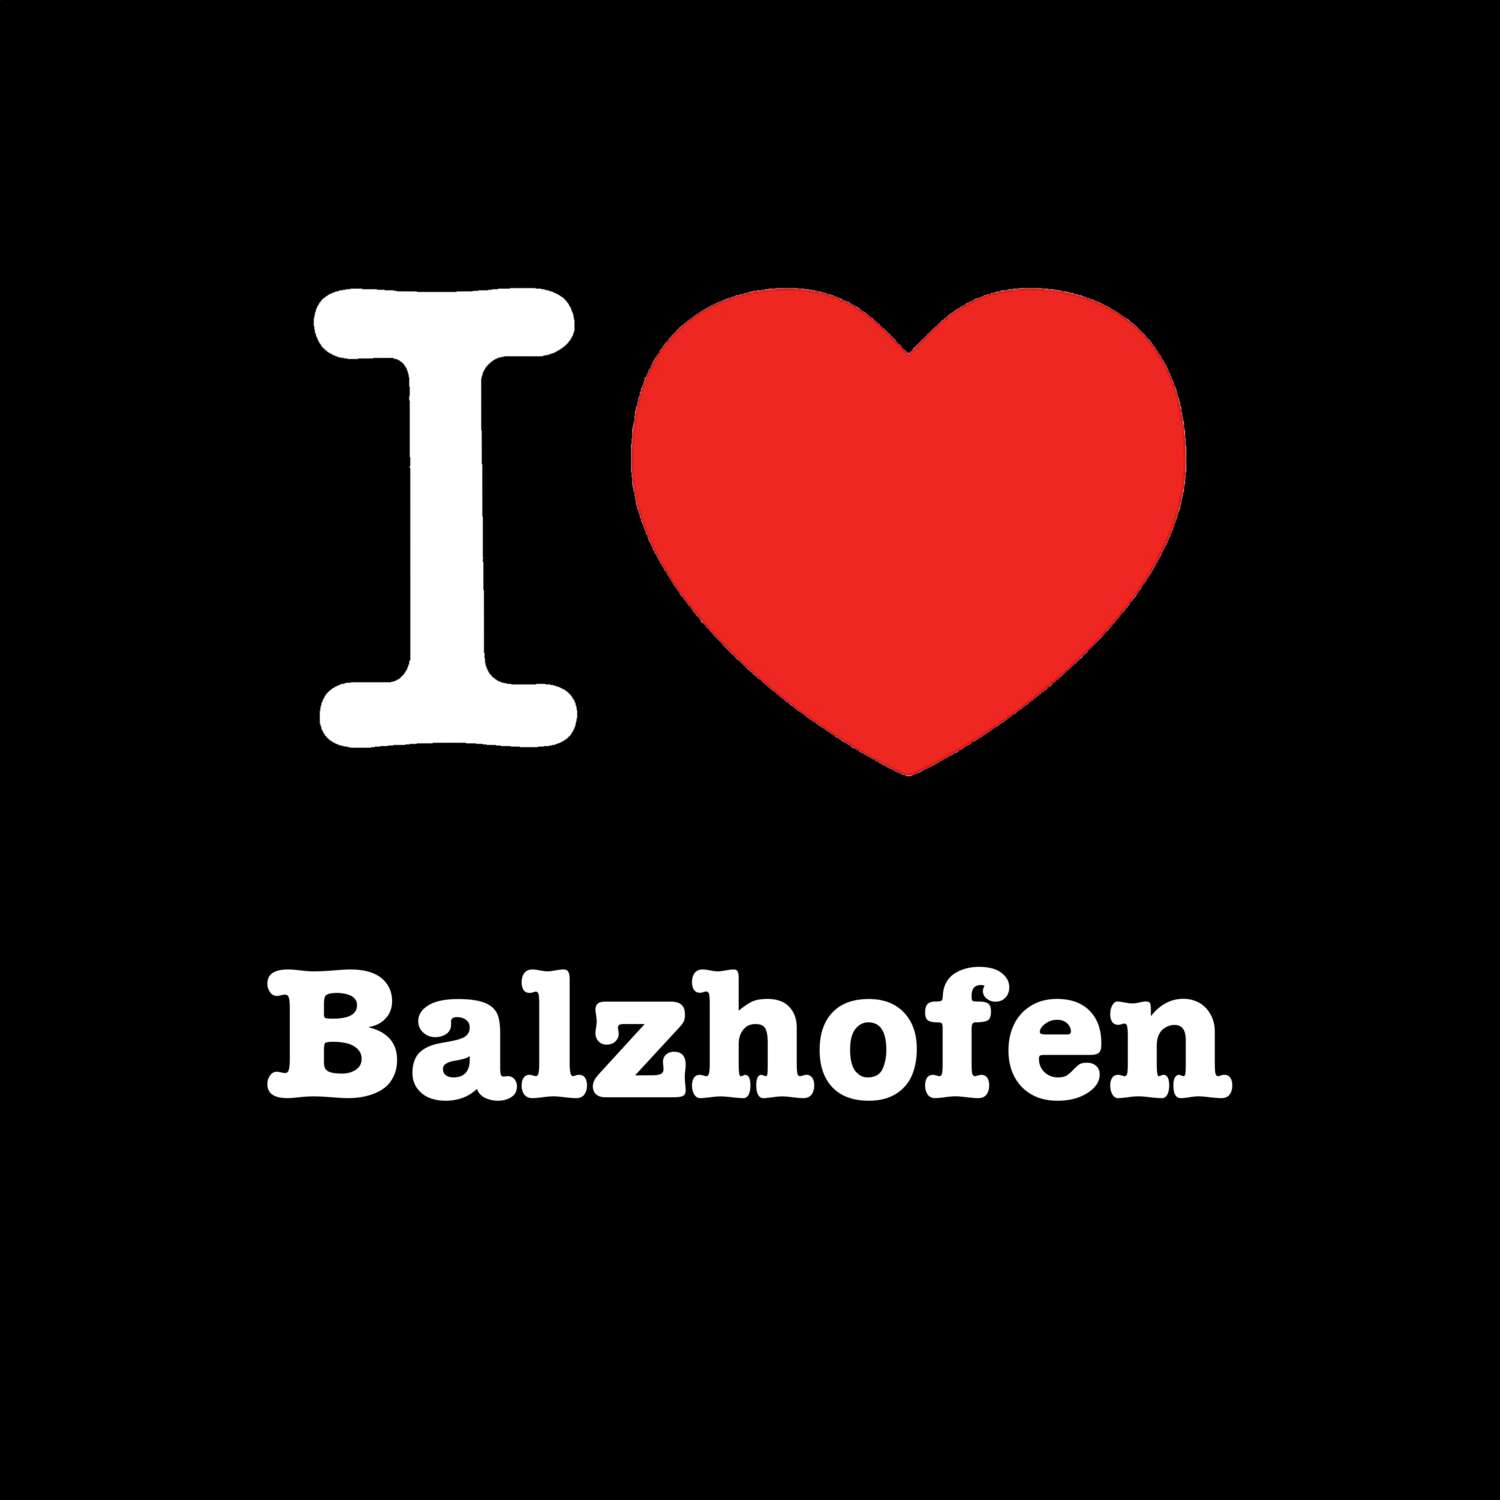 Balzhofen T-Shirt »I love«